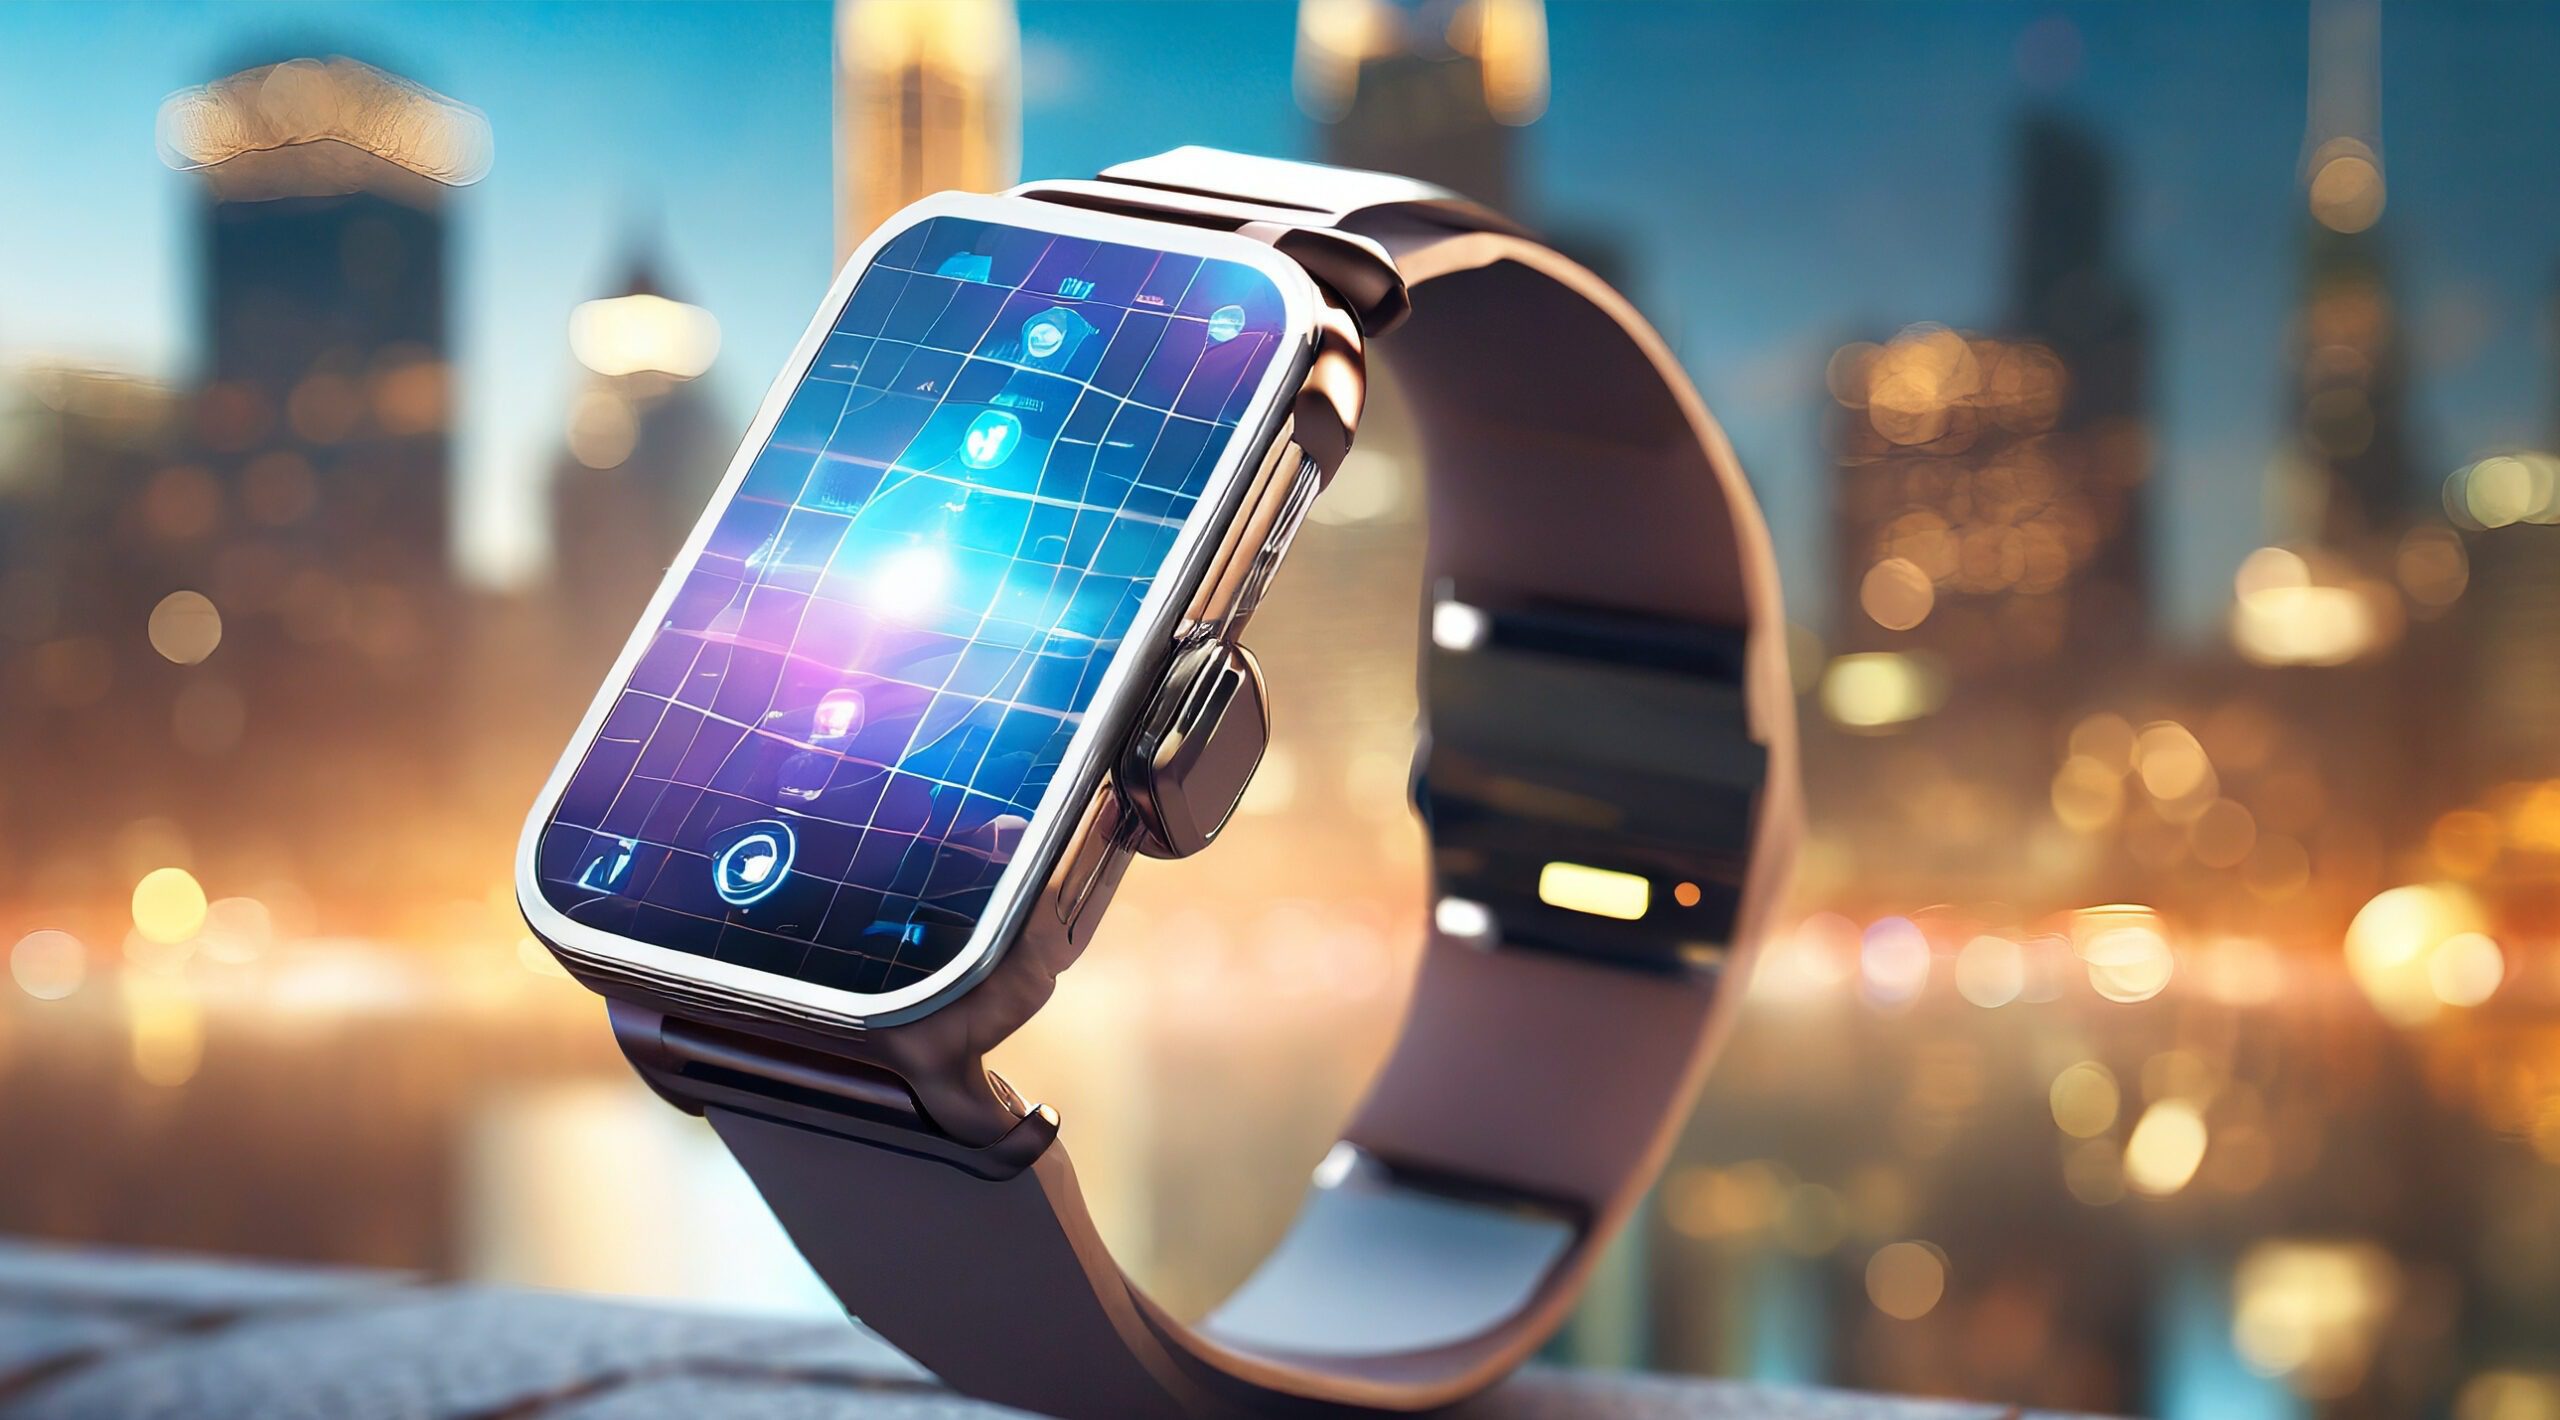 Futuristic looking smartwatch